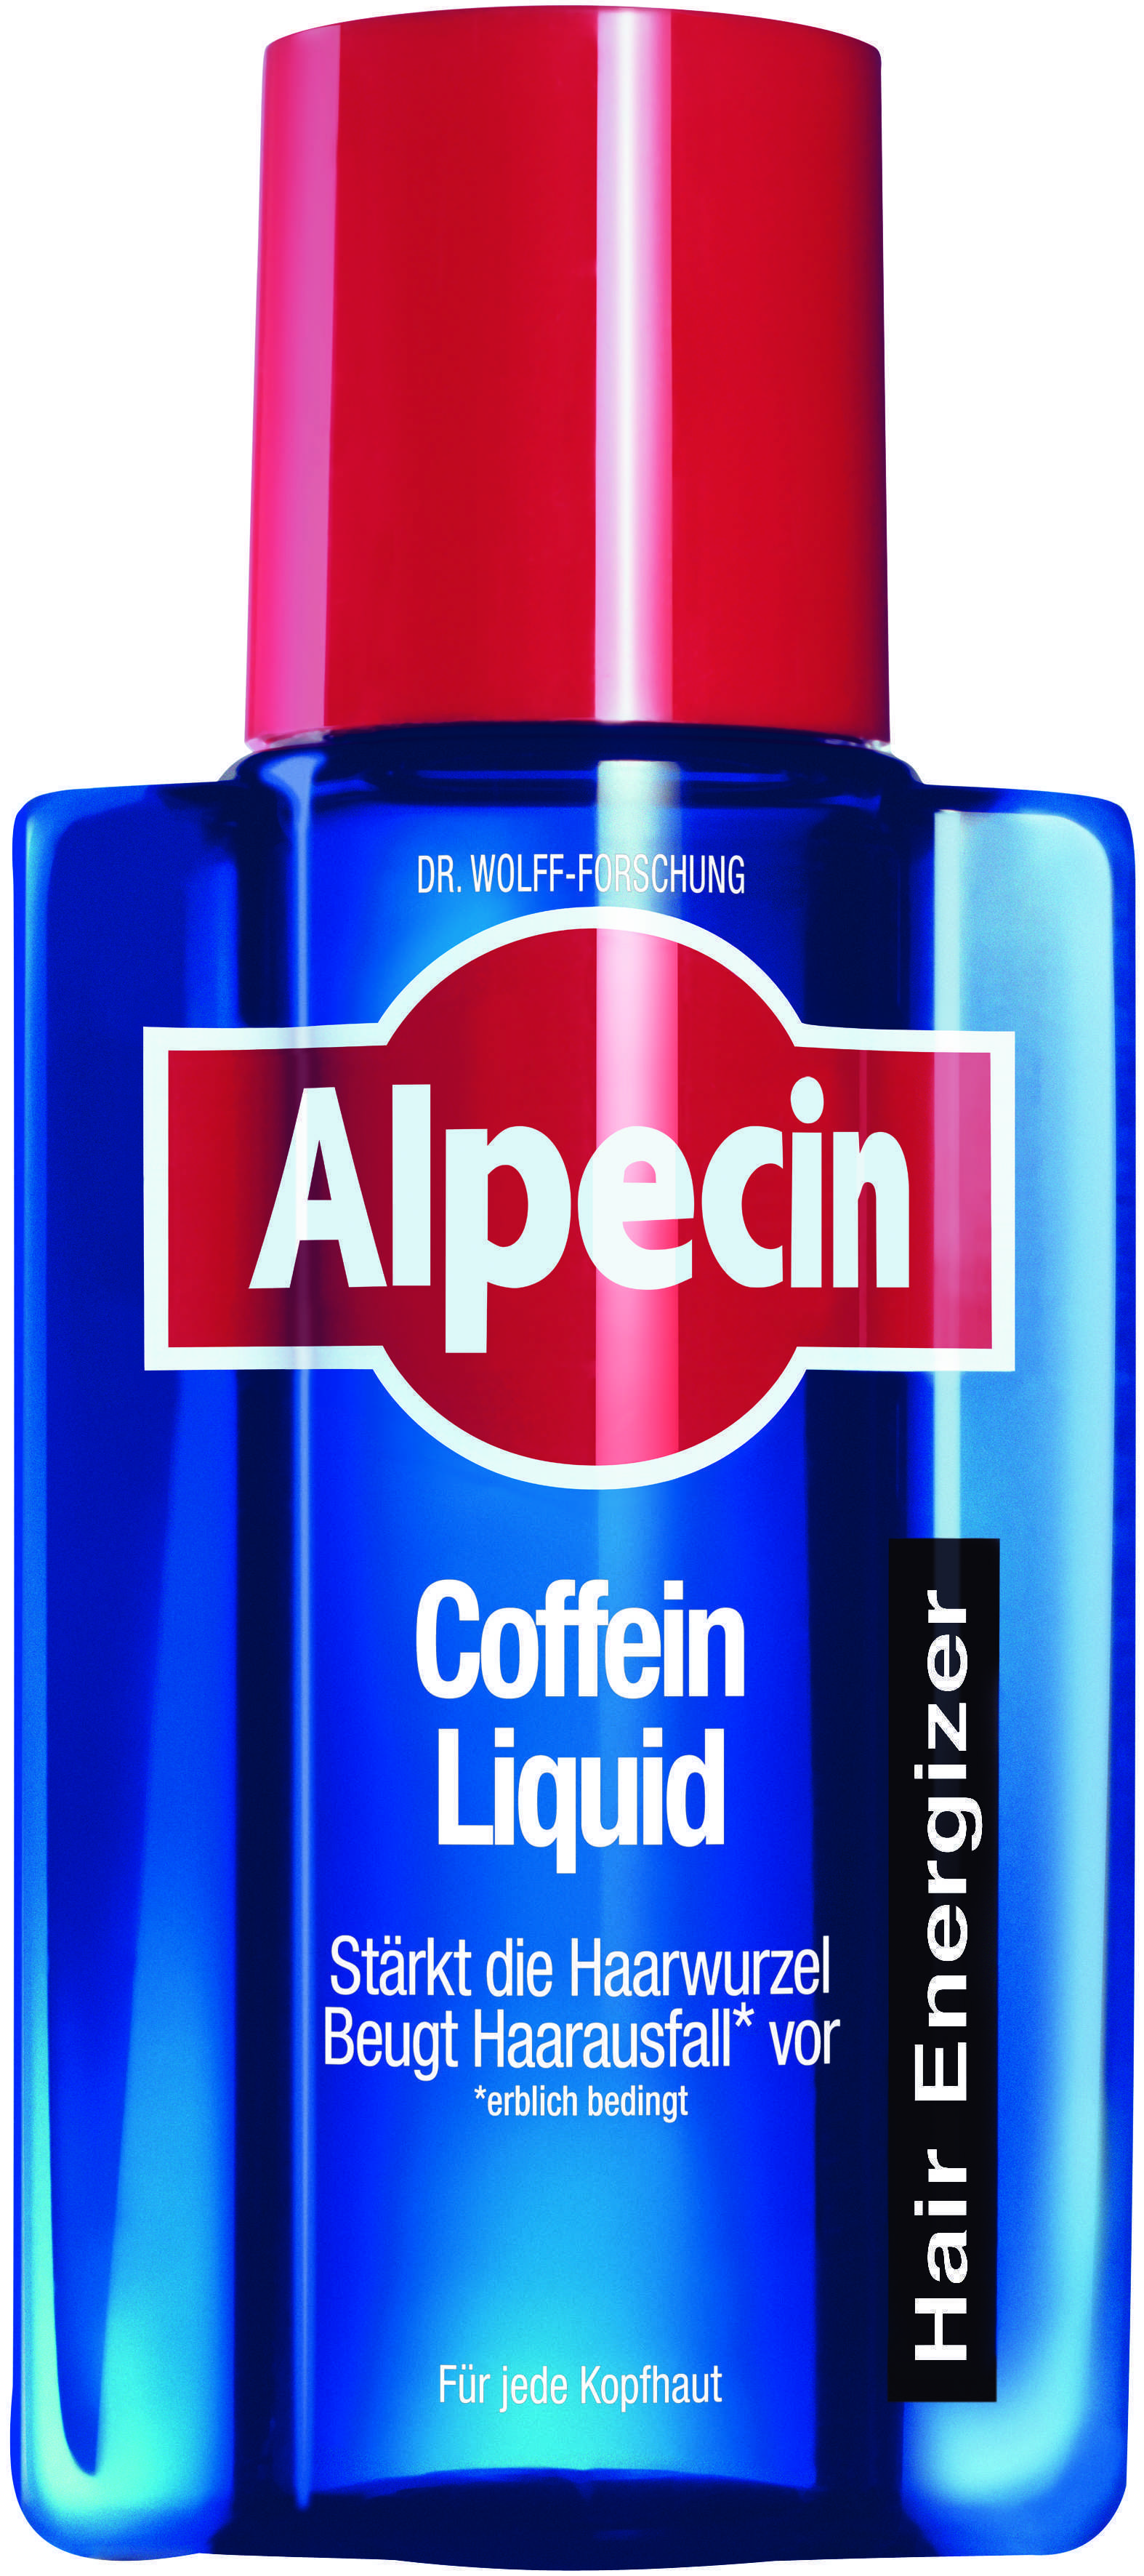 ALPECIN COFFEIN HW LIQUID